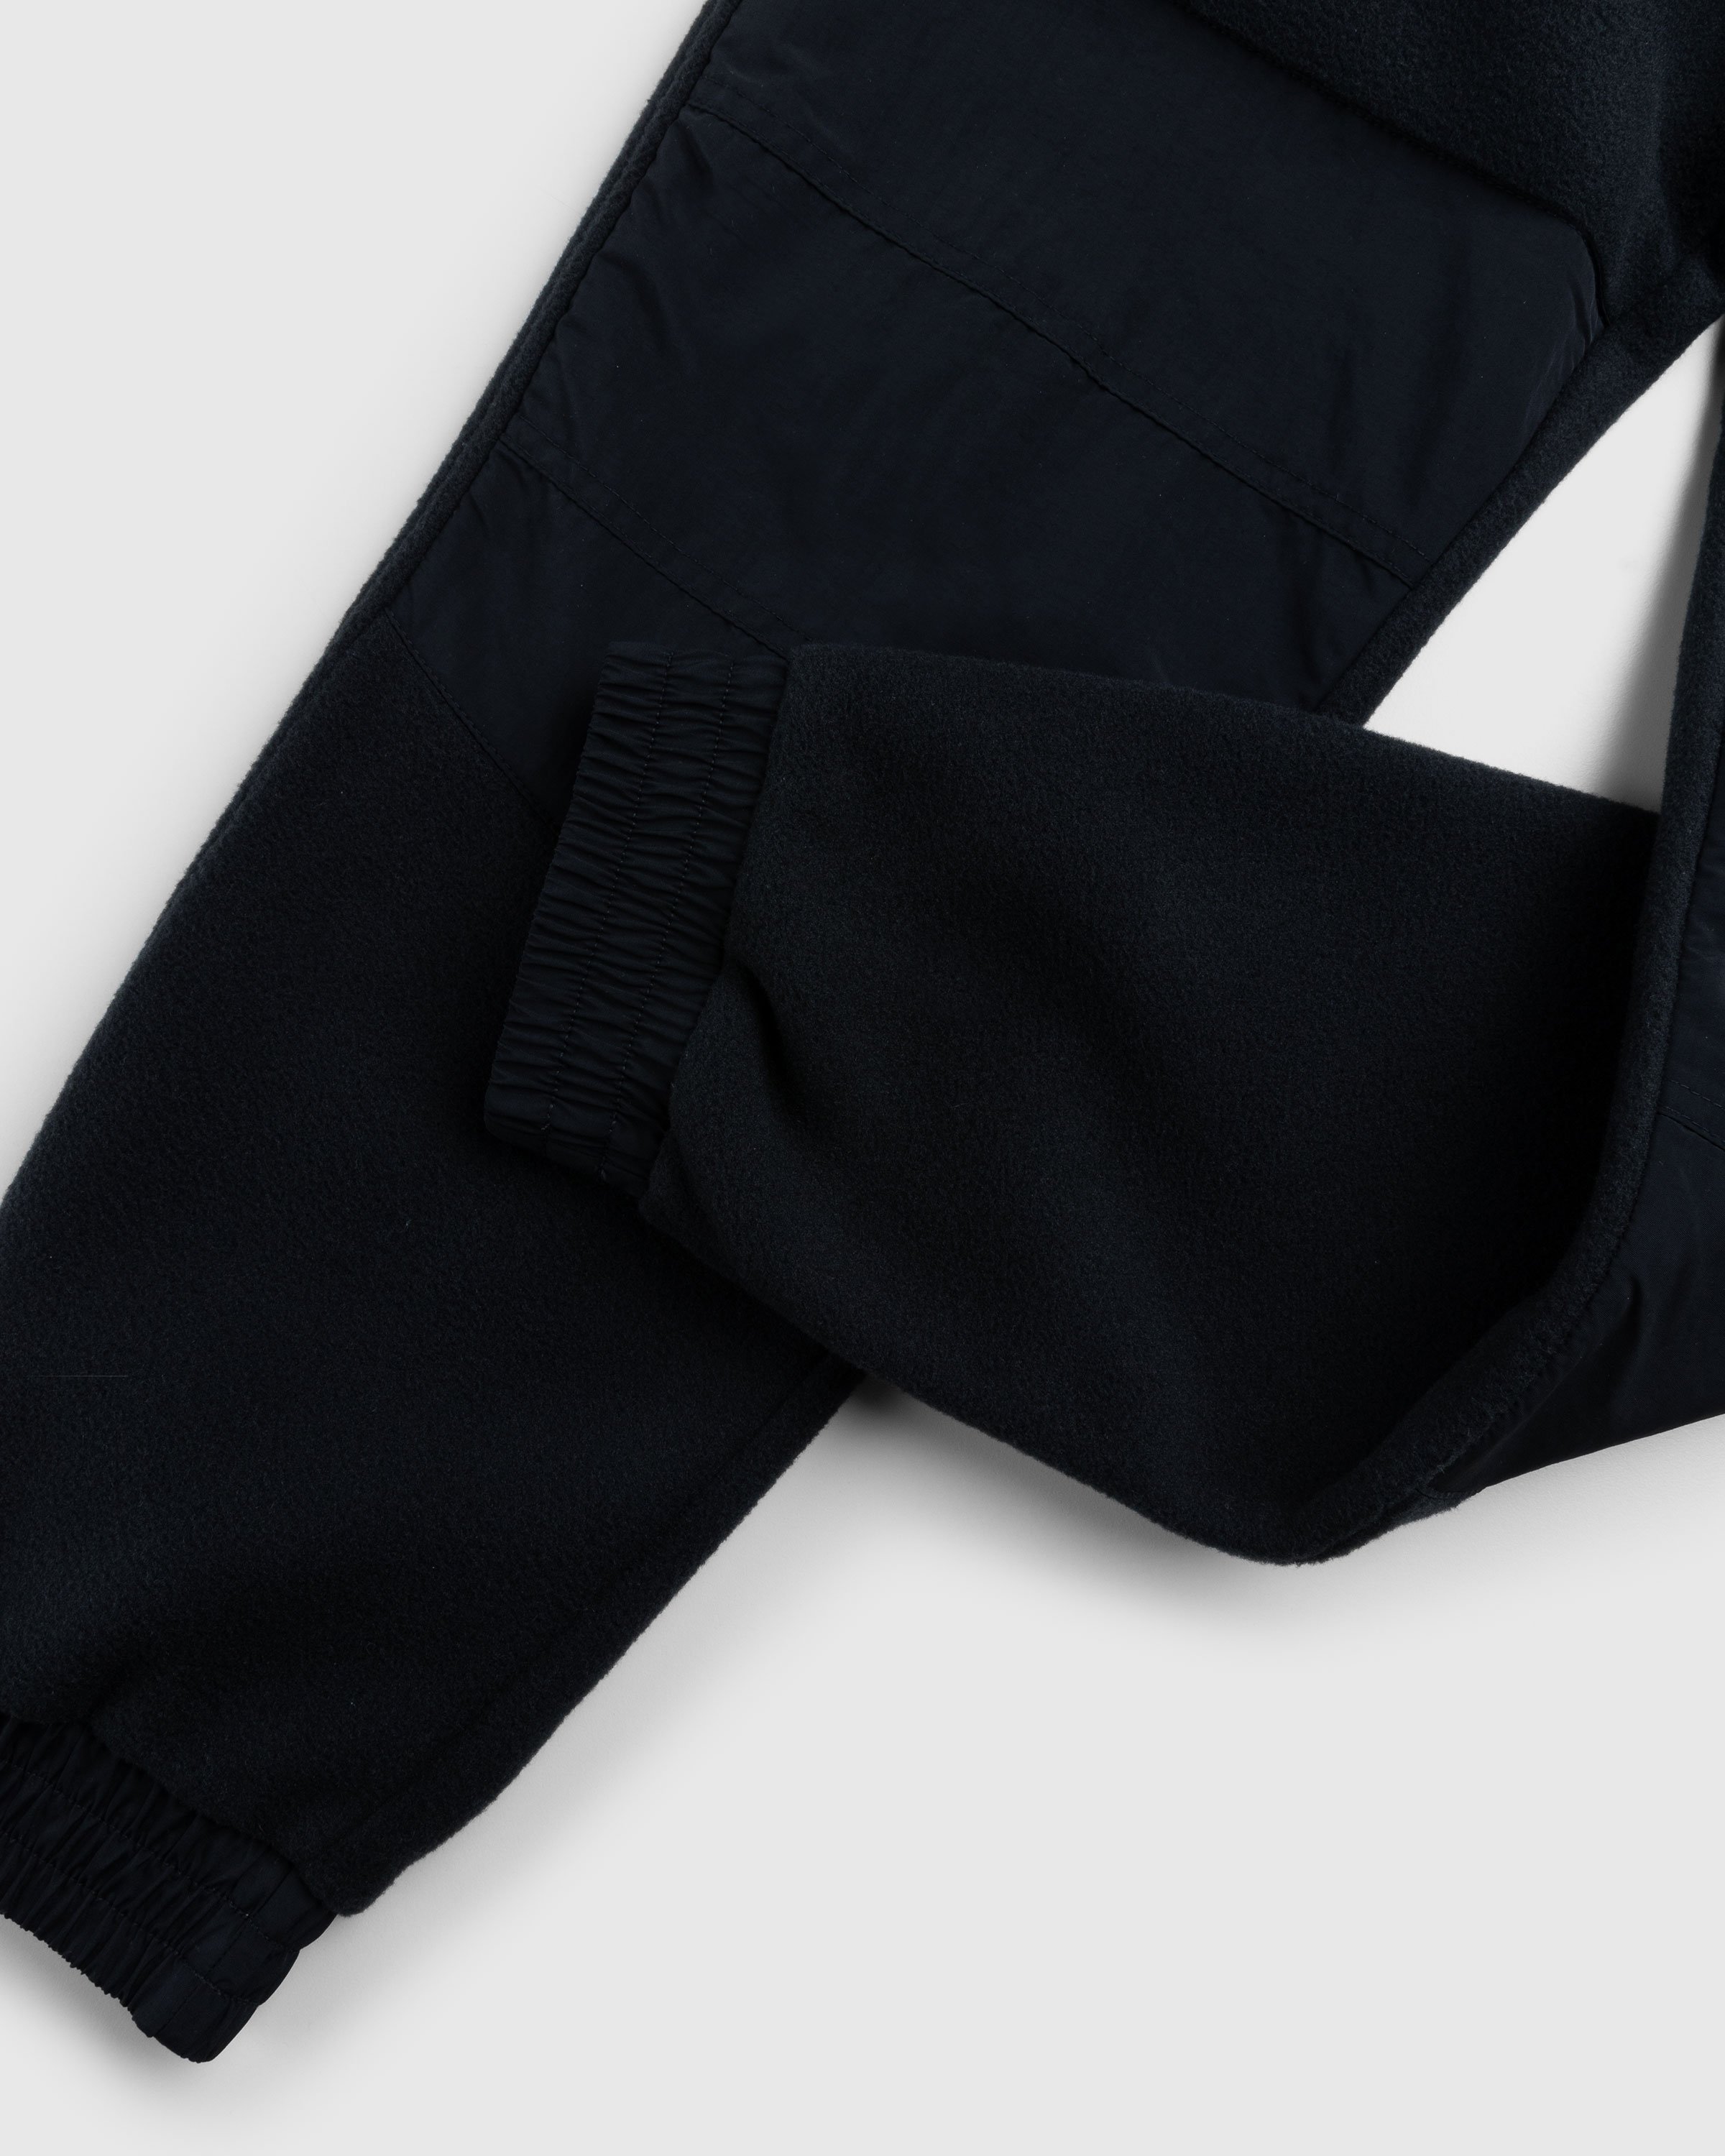 The North Face - Denali Pant Black - Clothing - Black - Image 5